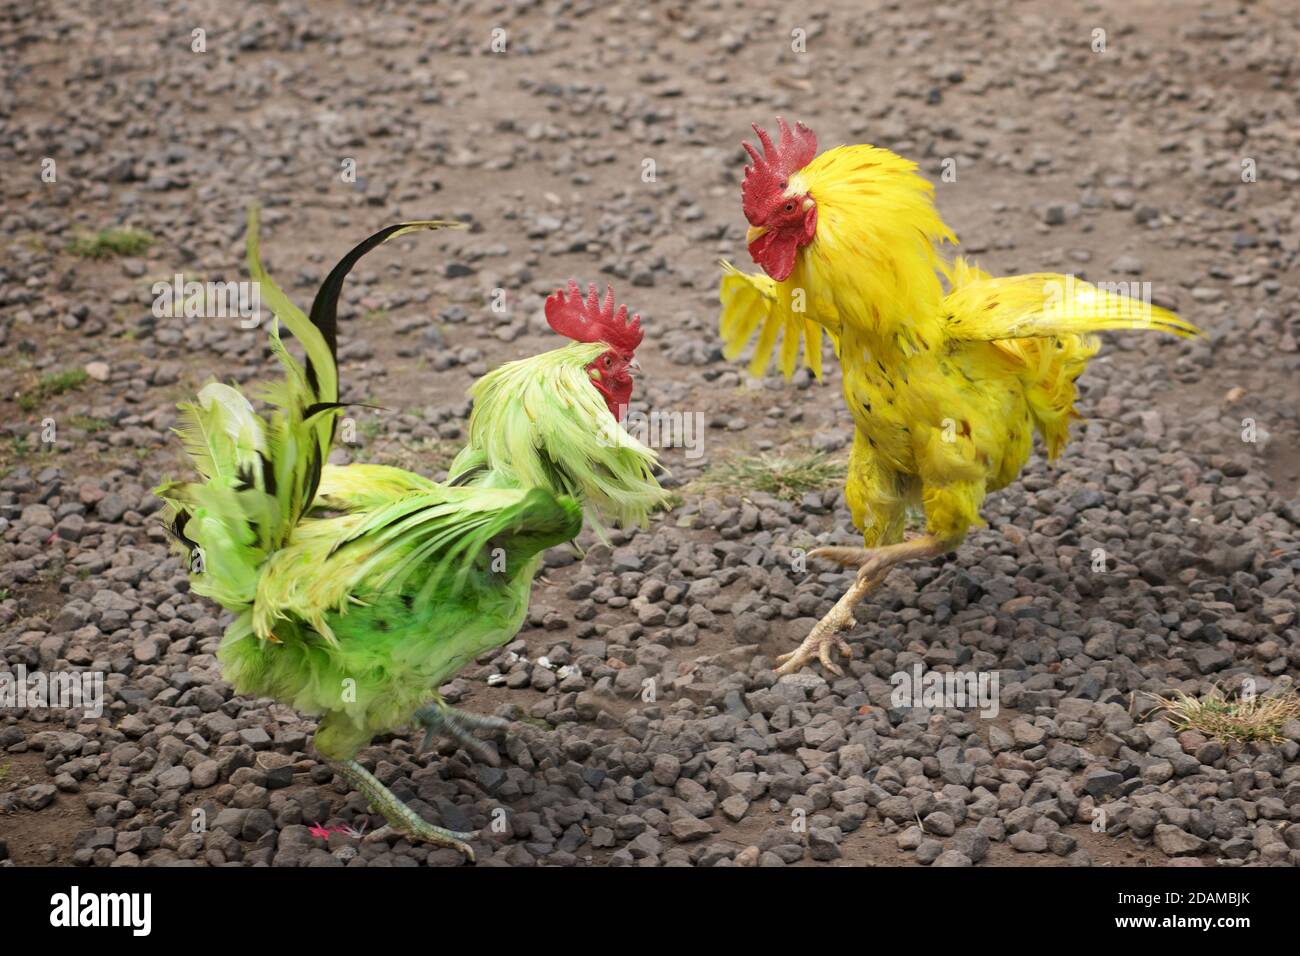 2 coloured cockerels. Mock cockfighting. Tenganan Pegringsinga, Bali, Indonesia Stock Photo